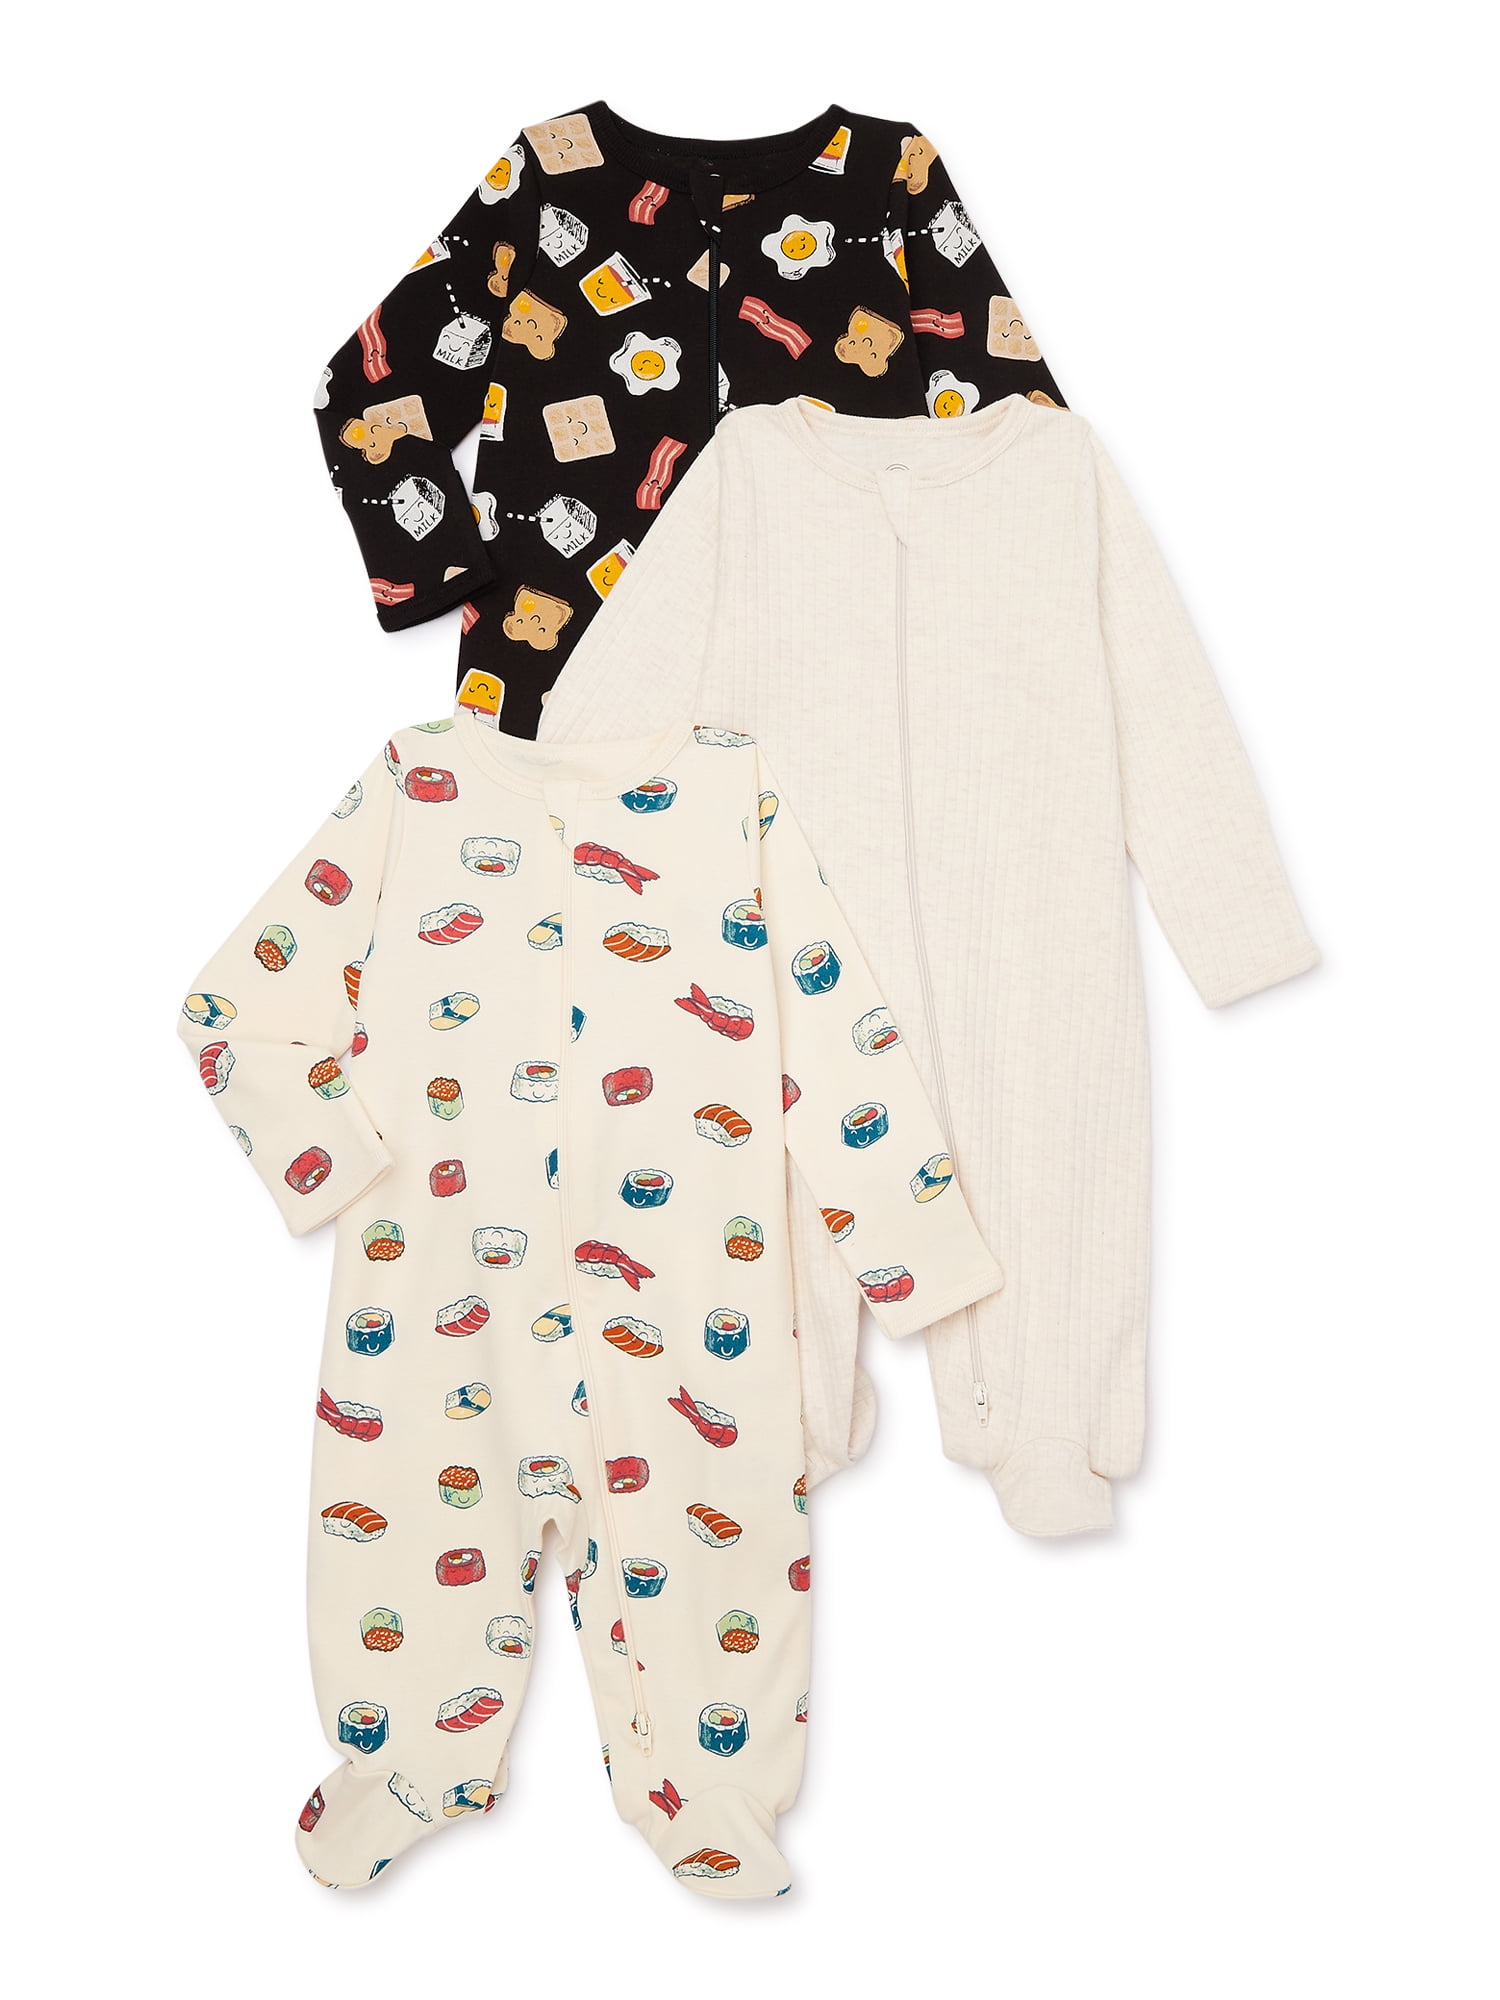 Infants' Wicked Warm Underwear, One-Piece